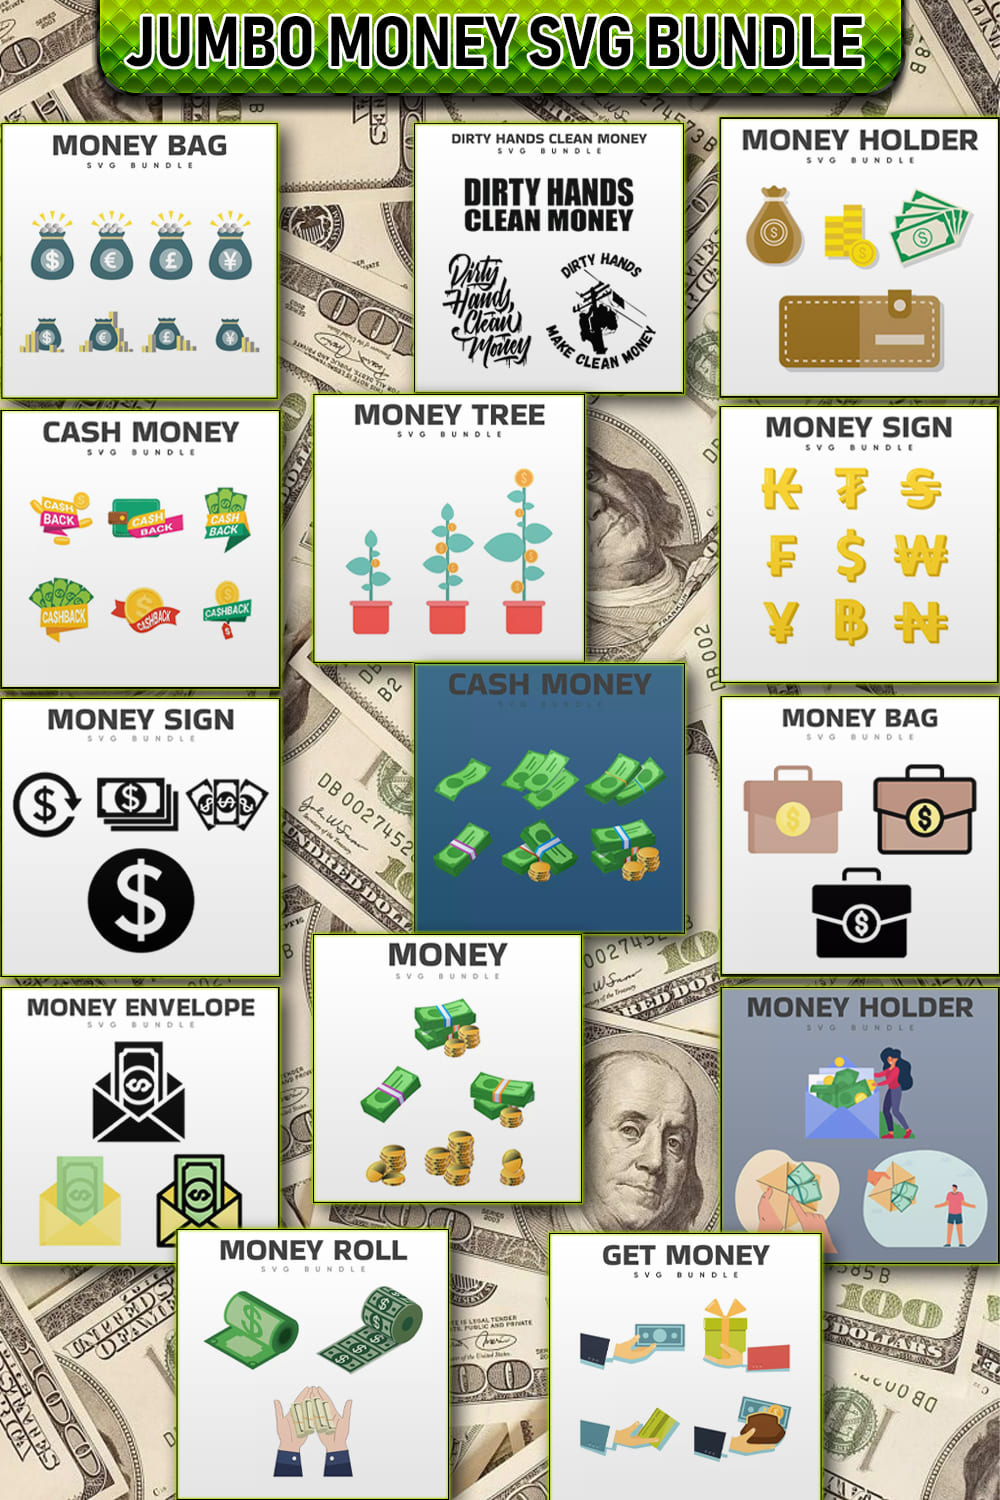 Jumbo Money SVG Bundle Pinterest.